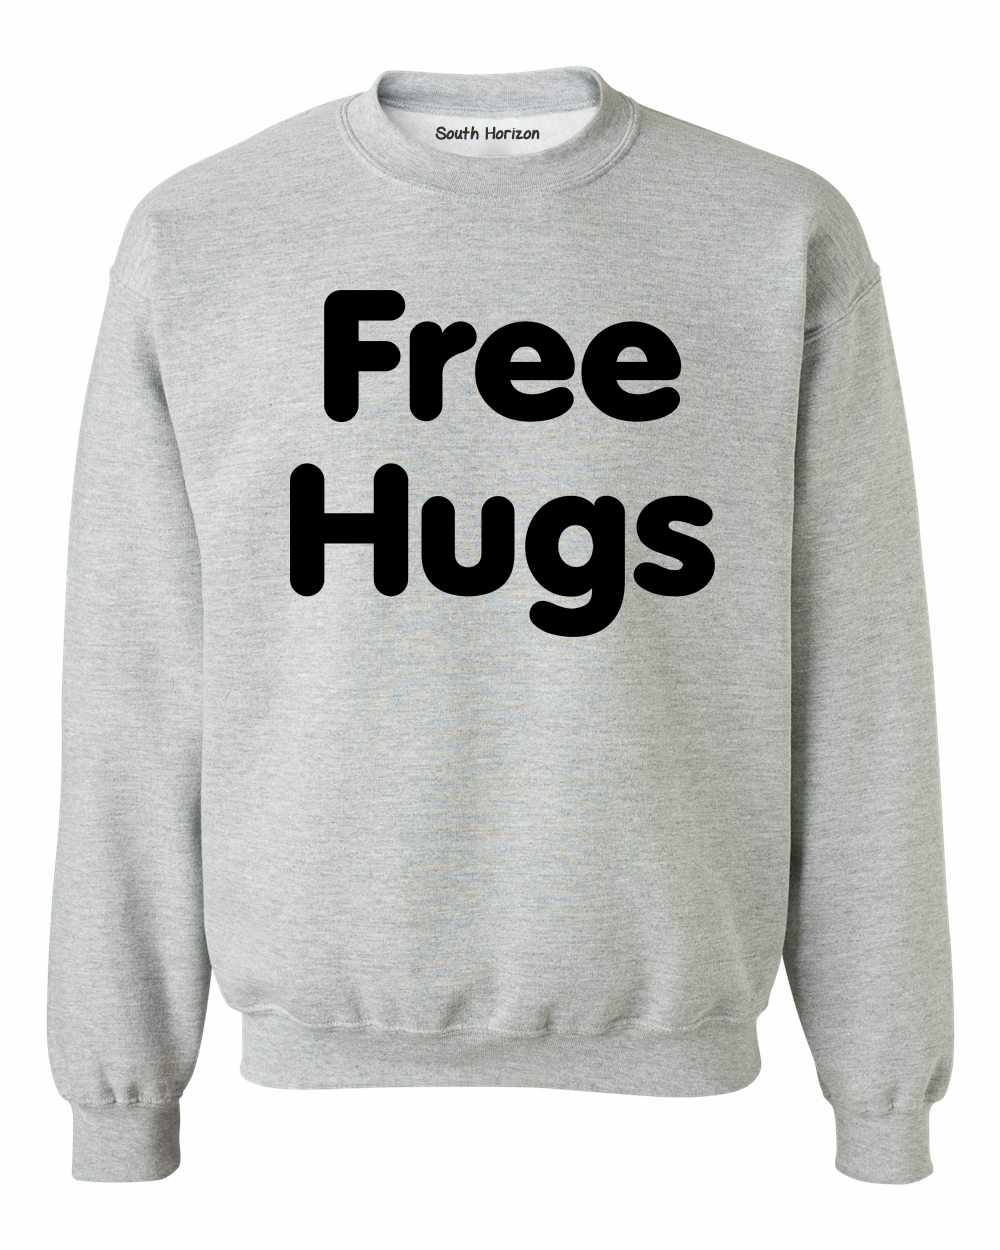 FREE HUGS on SweatShirt